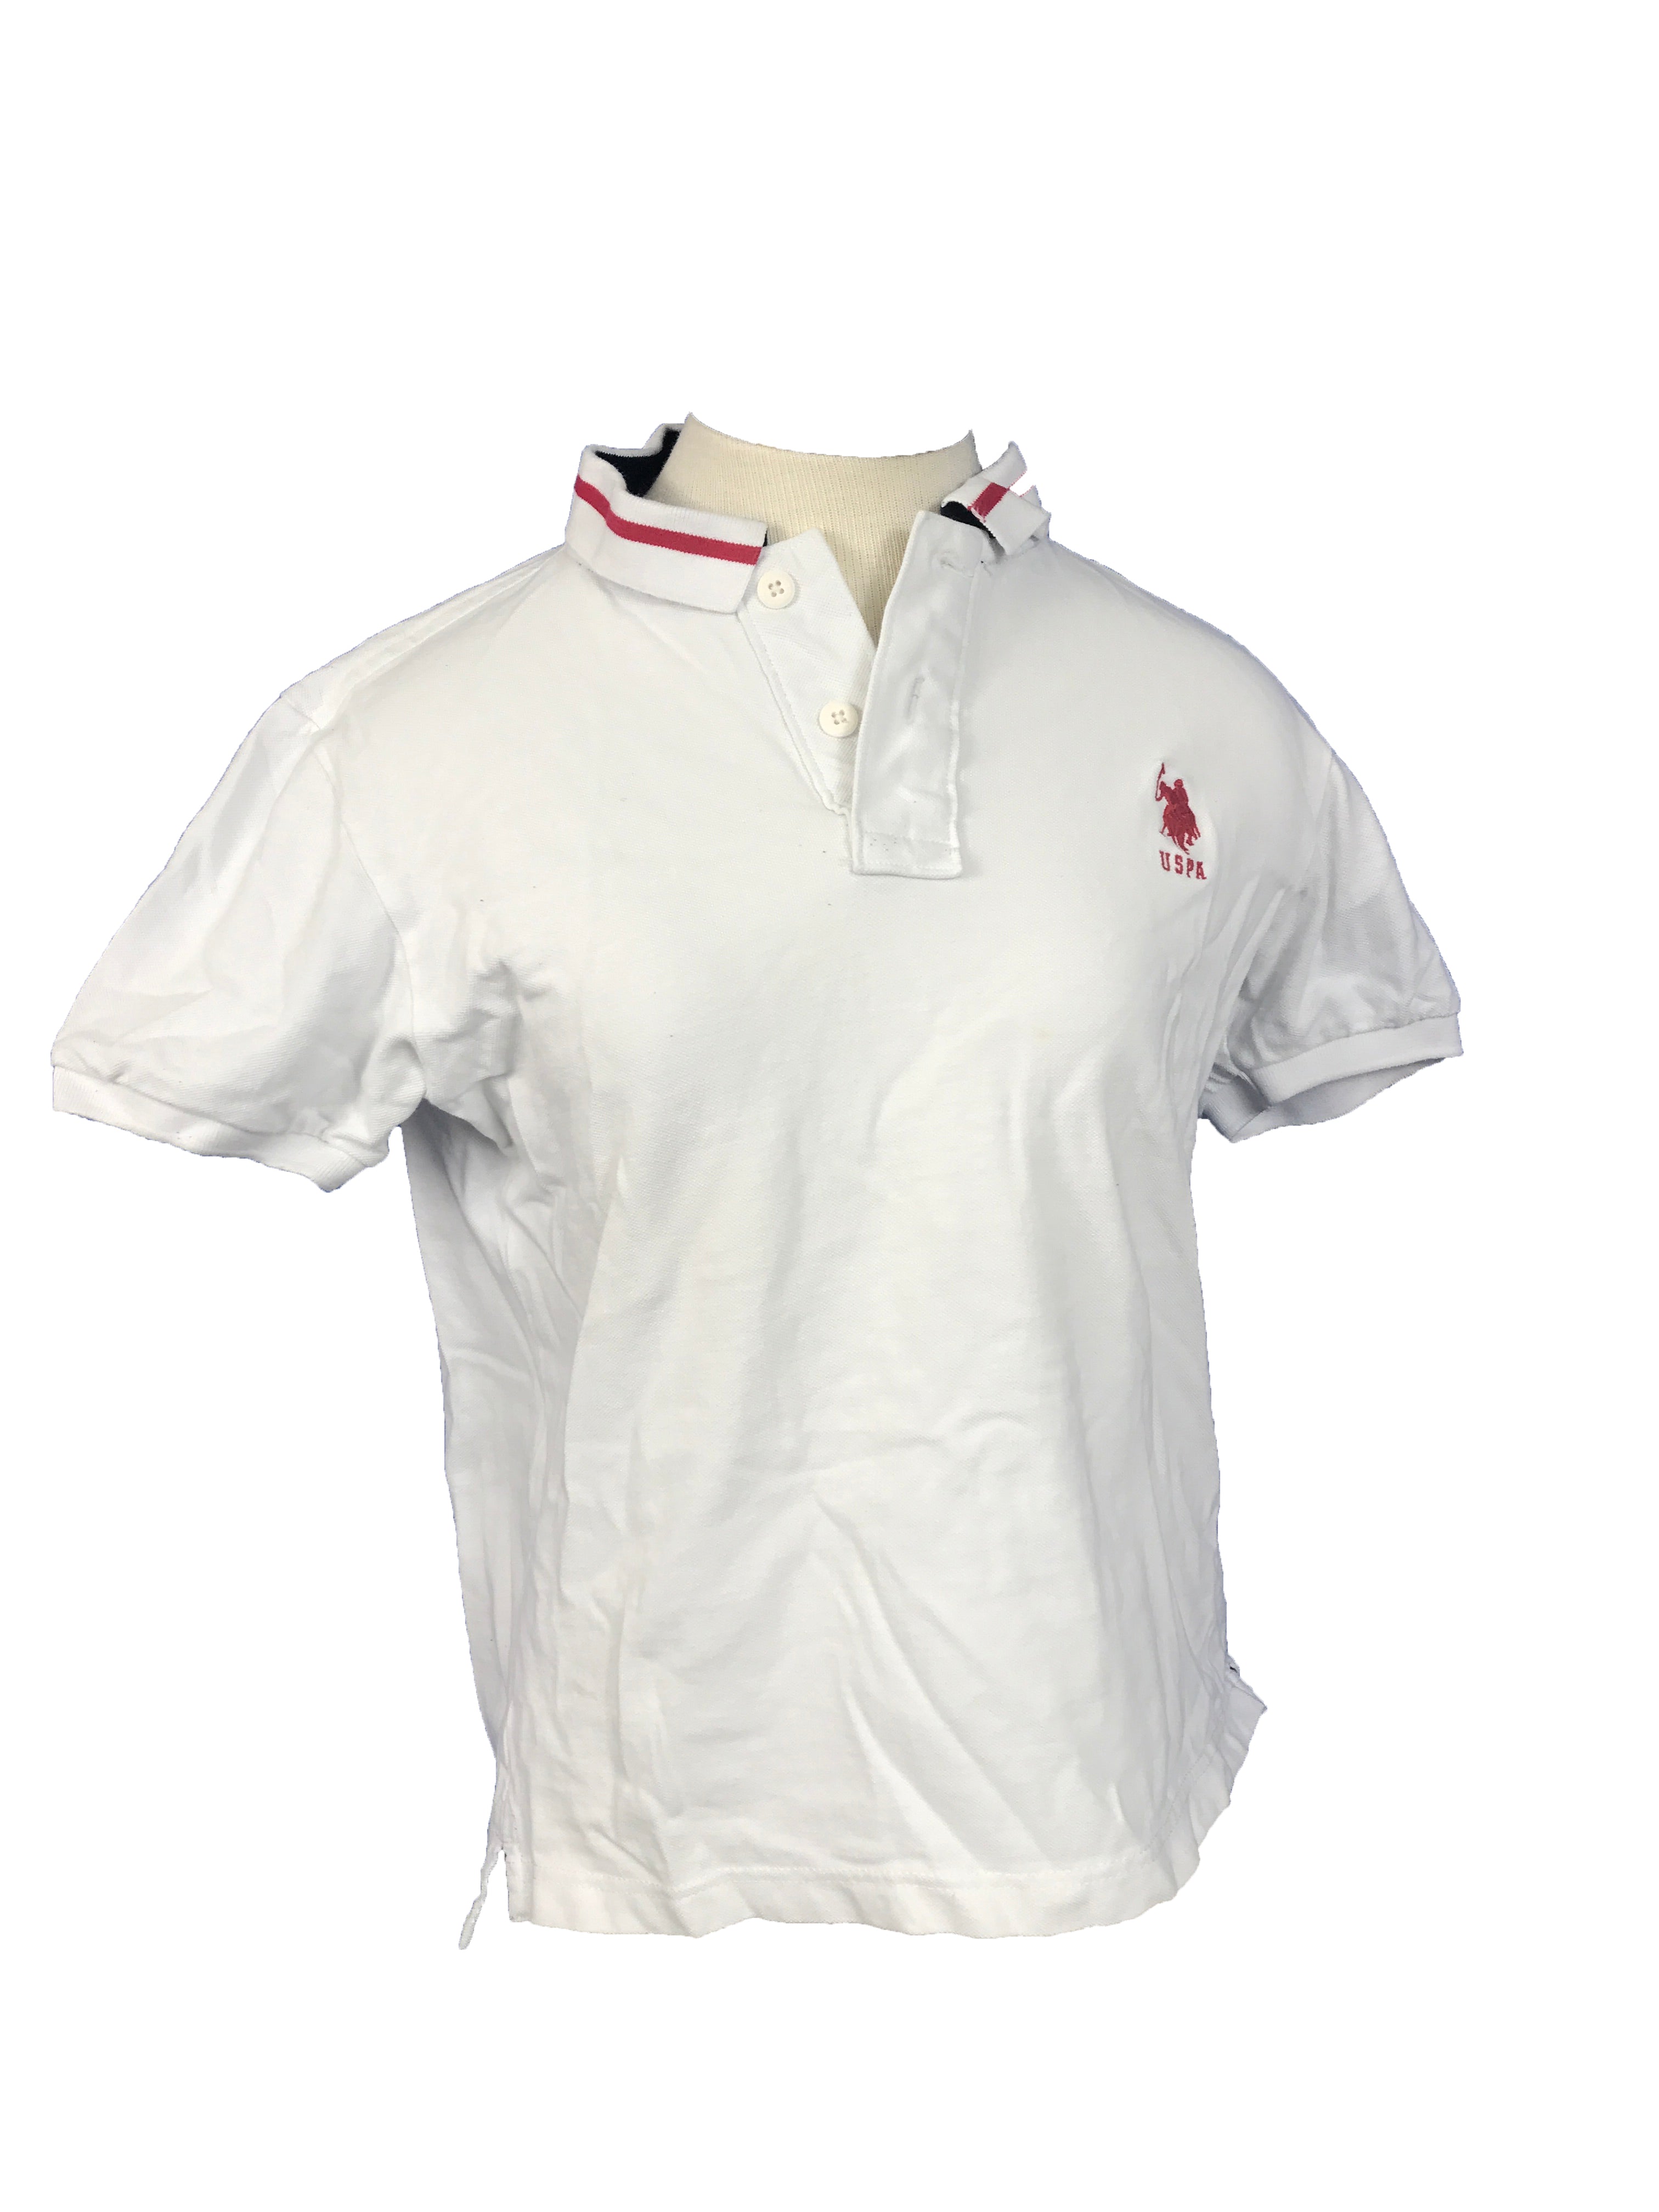 U.S. Polo Association White Collared Shirt Youth Size Medium